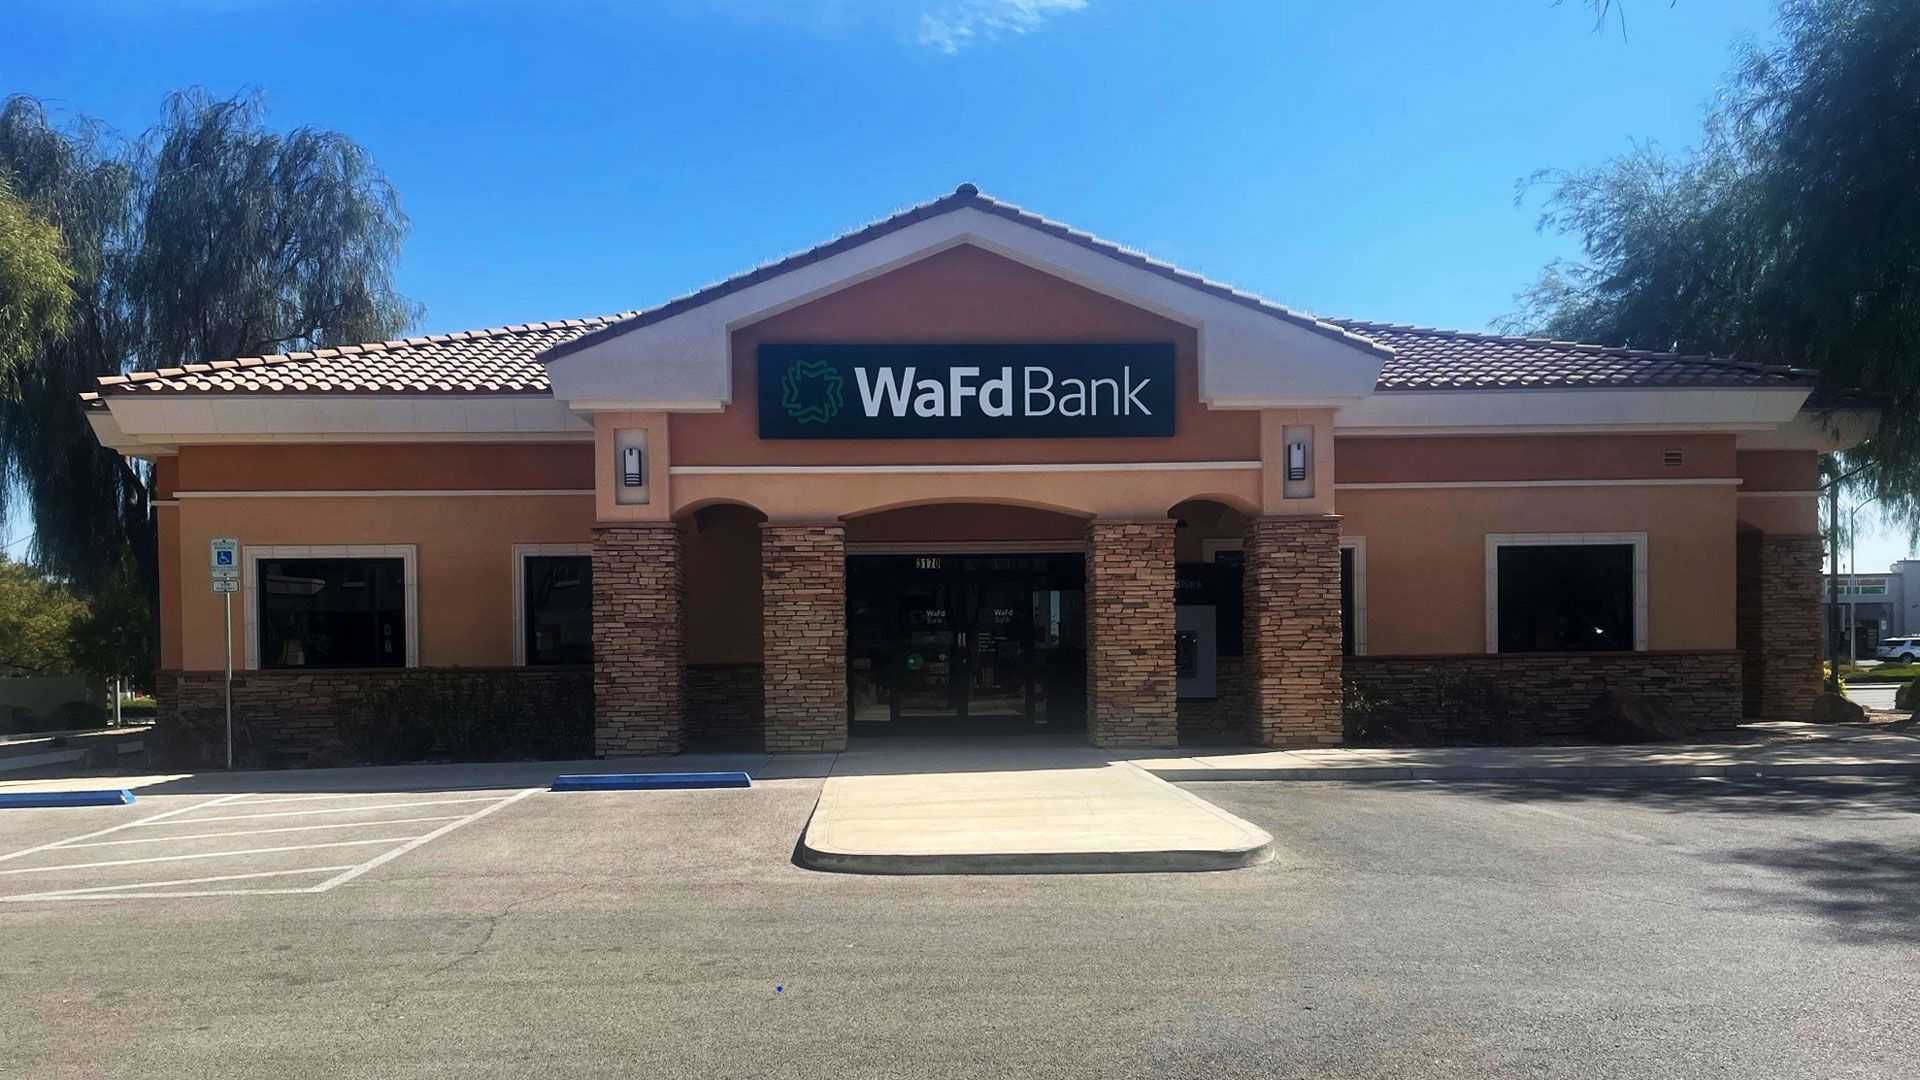 WaFd Bank in North Las Vegas, Nevada #1159 - Washington Federal.